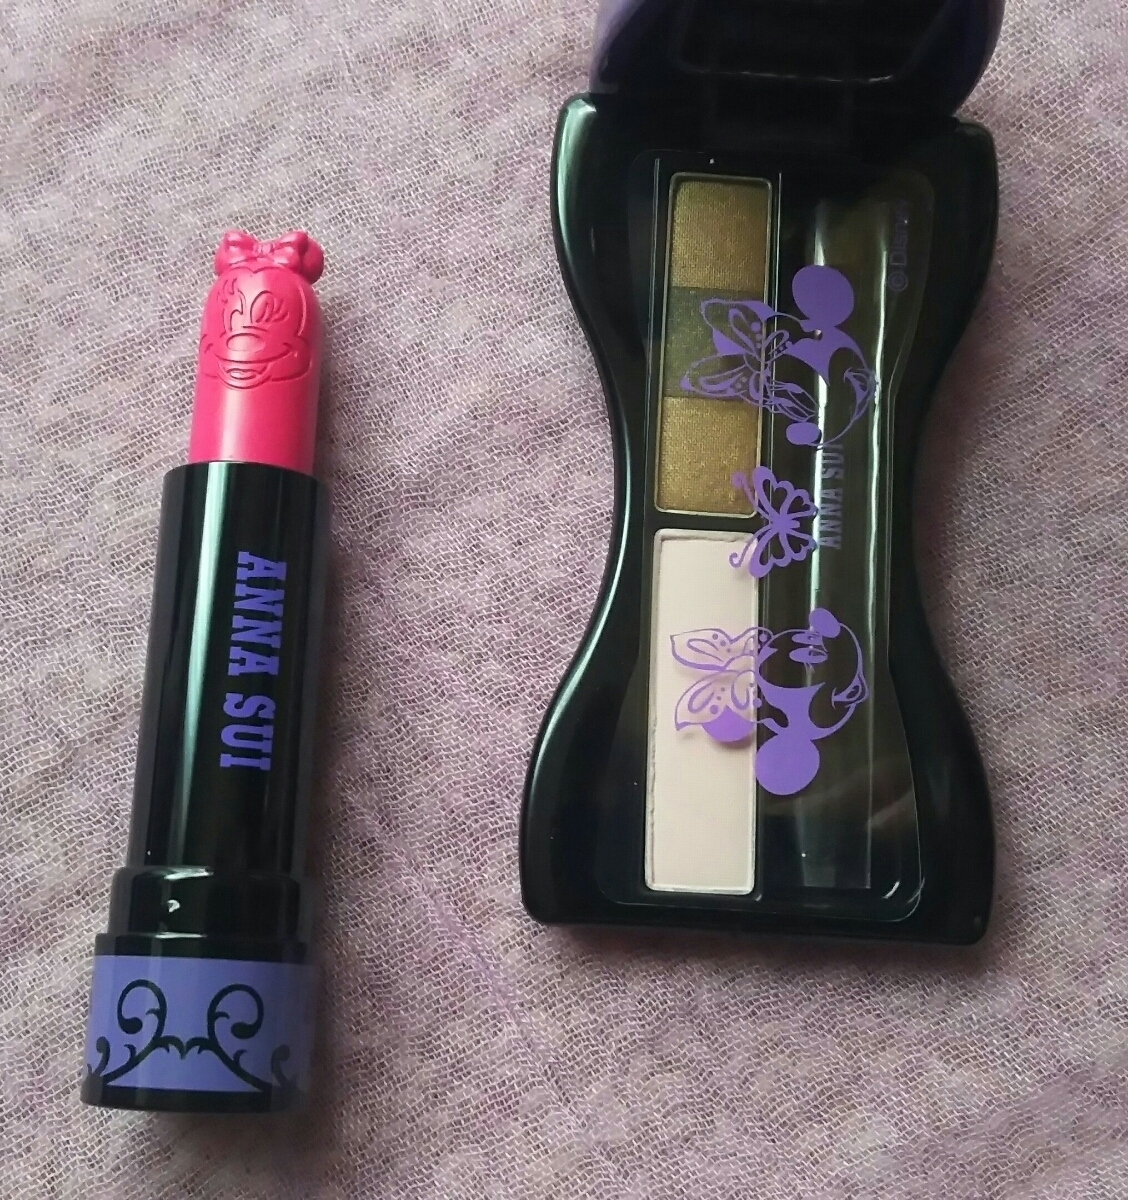  free shipping! Anna Sui make-up kit Minnie Mouse lip eyeshadow Disney minnie purple rare collaboration limitation coffret 